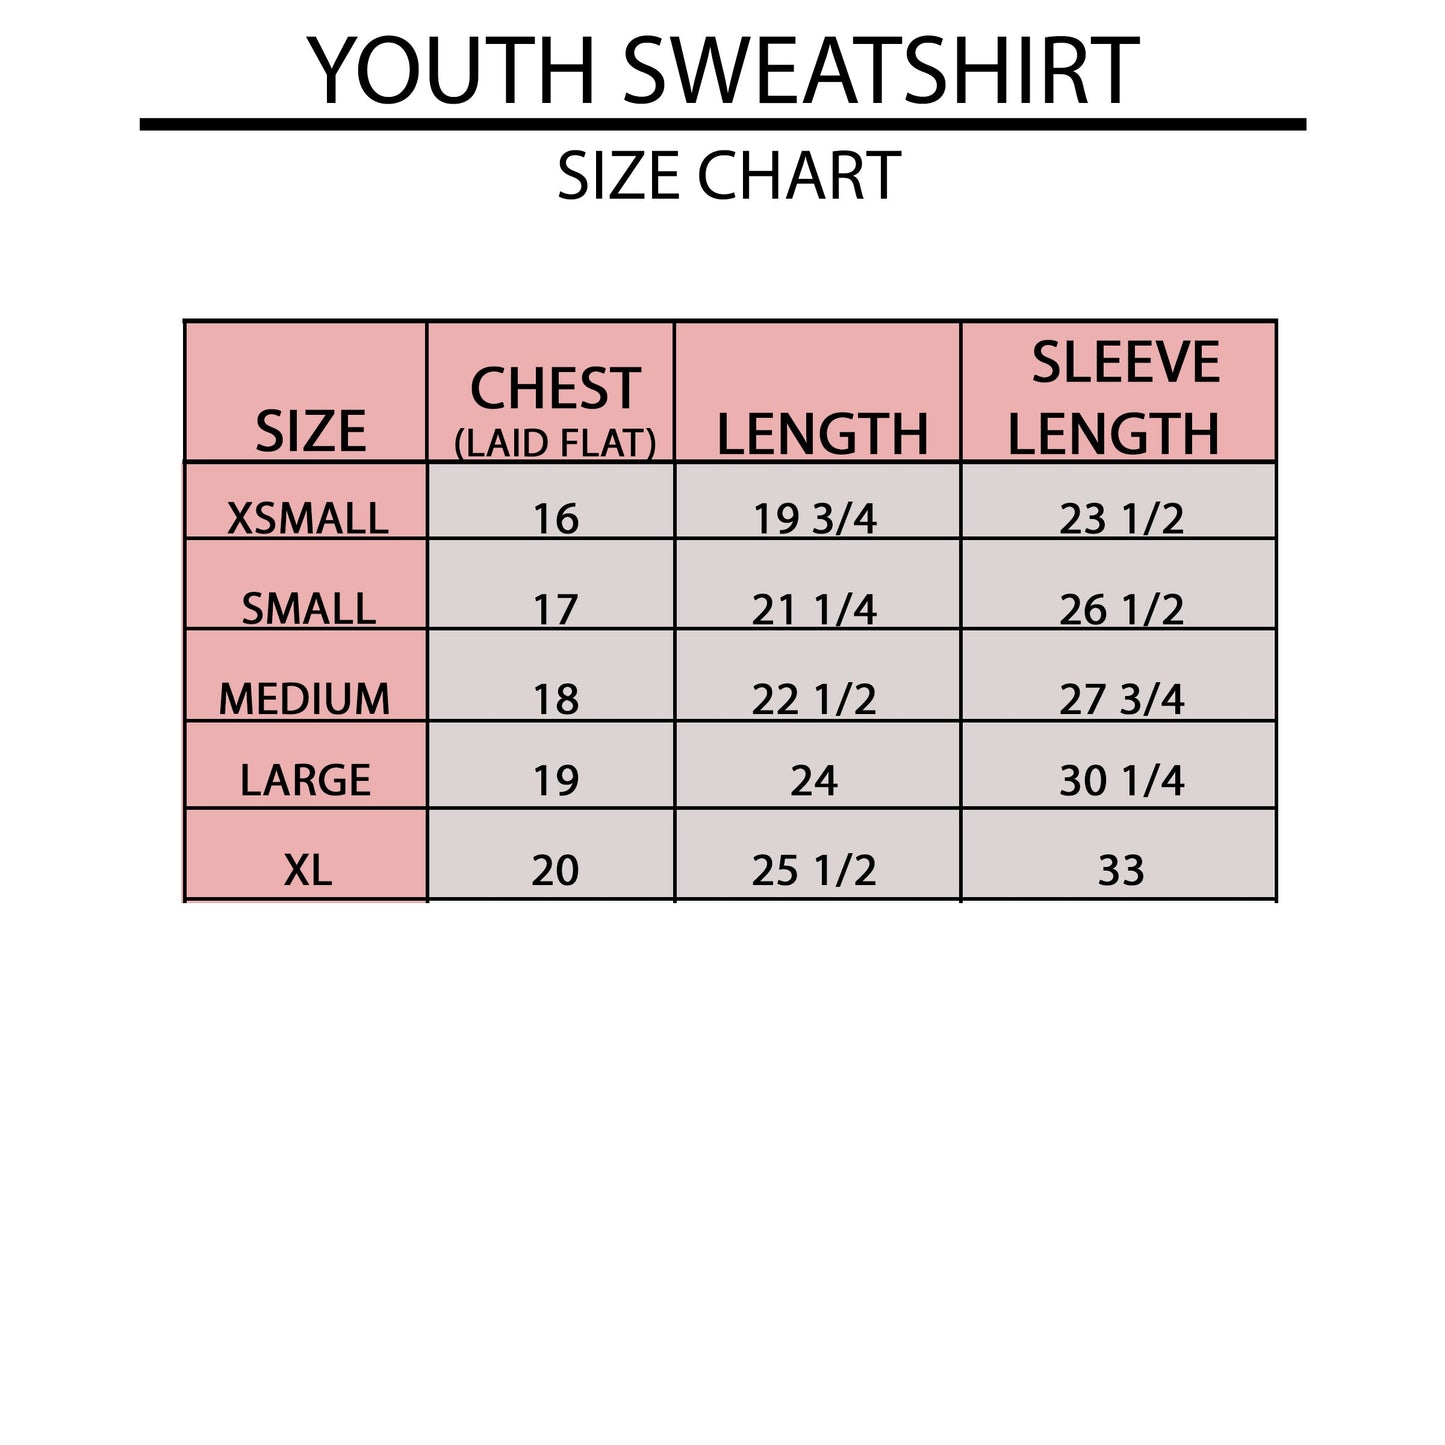 I Dig You | Youth Sweatshirt